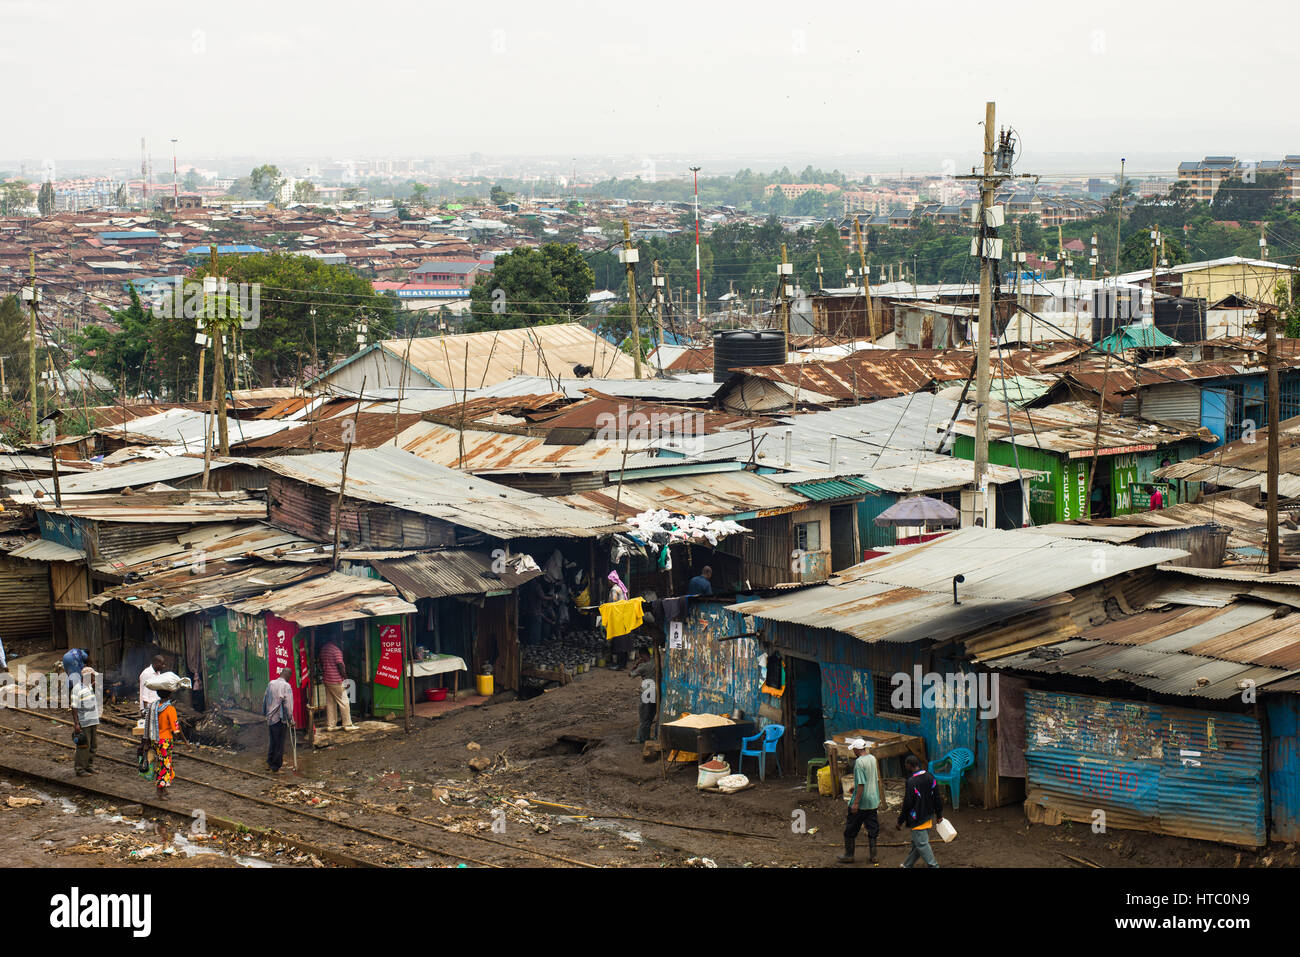 Inhabitants of Kibera Slum Going About Daily Life, Nairobi, Kenya Stock Photo